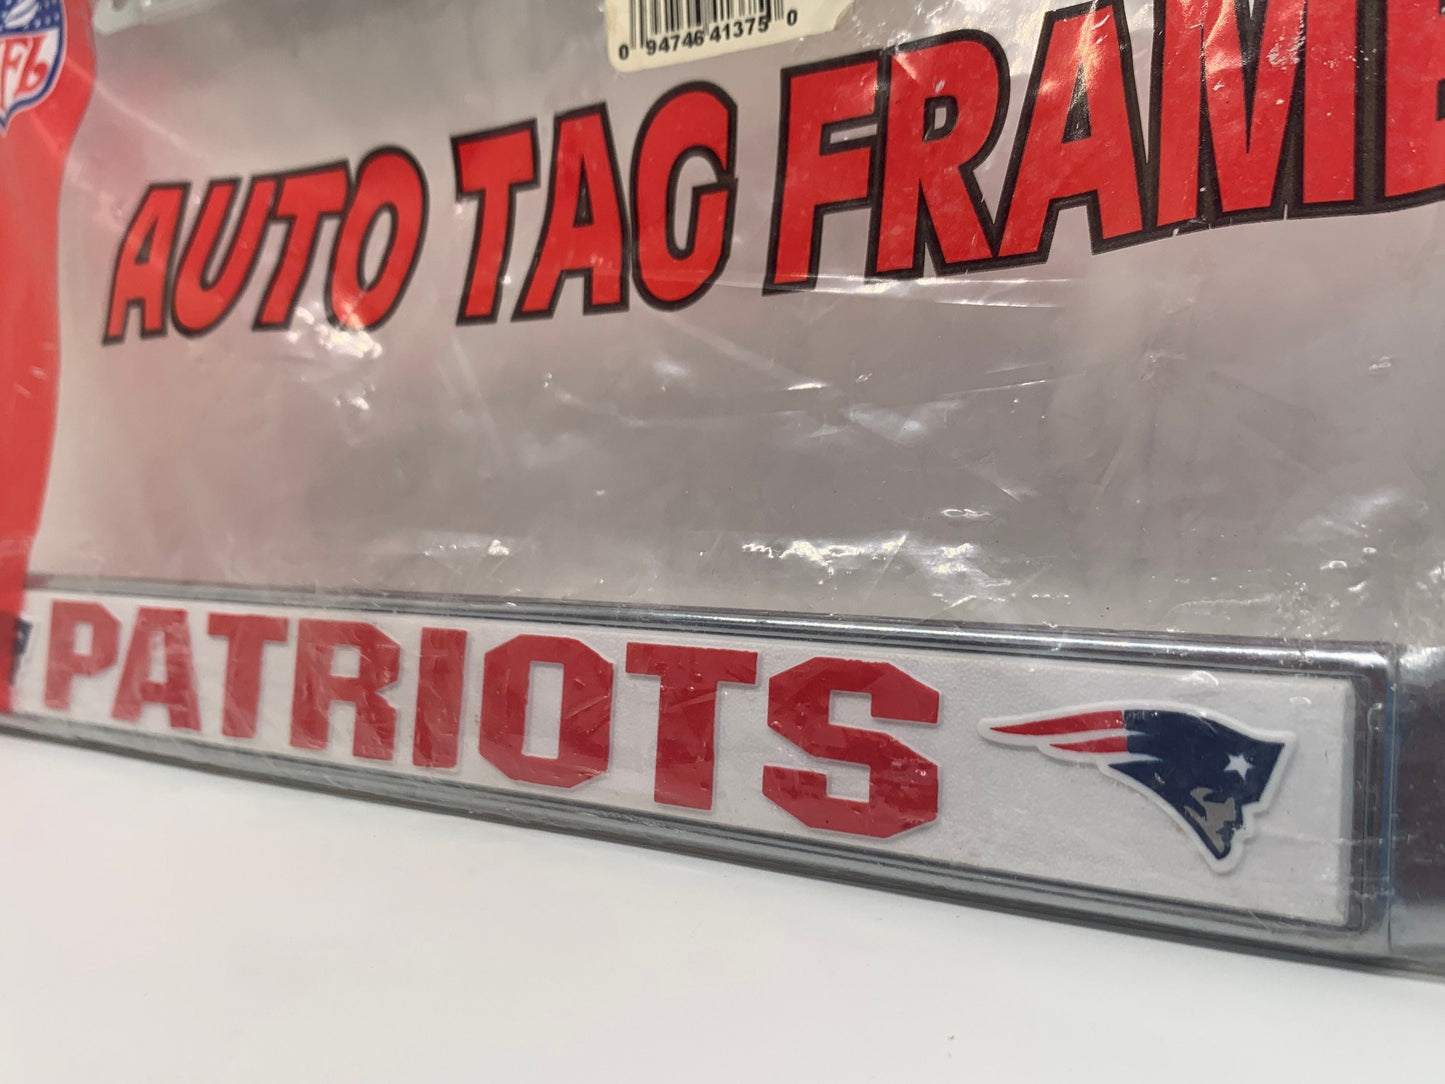 New England Patriots Auto Tag License Plate Frame Collectible Sports Memorabilia Perfect Birthday Gift Man Cave Football Decor Car Accessory